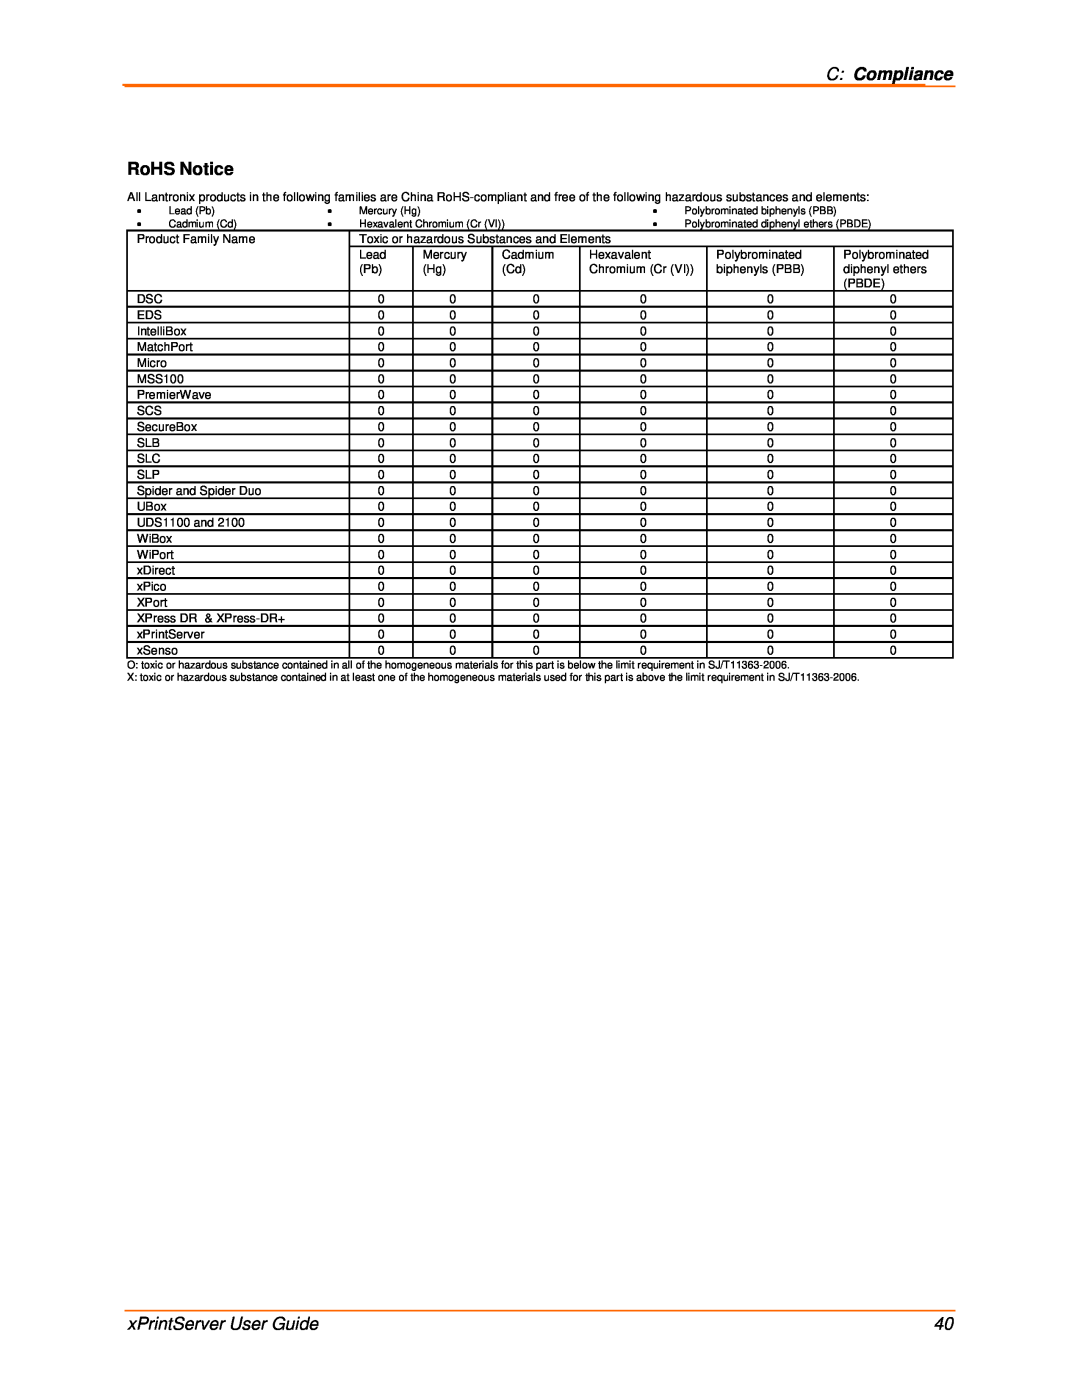 Lantronix 900-603 manual RoHS Notice, C Compliance, xPrintServer User Guide 